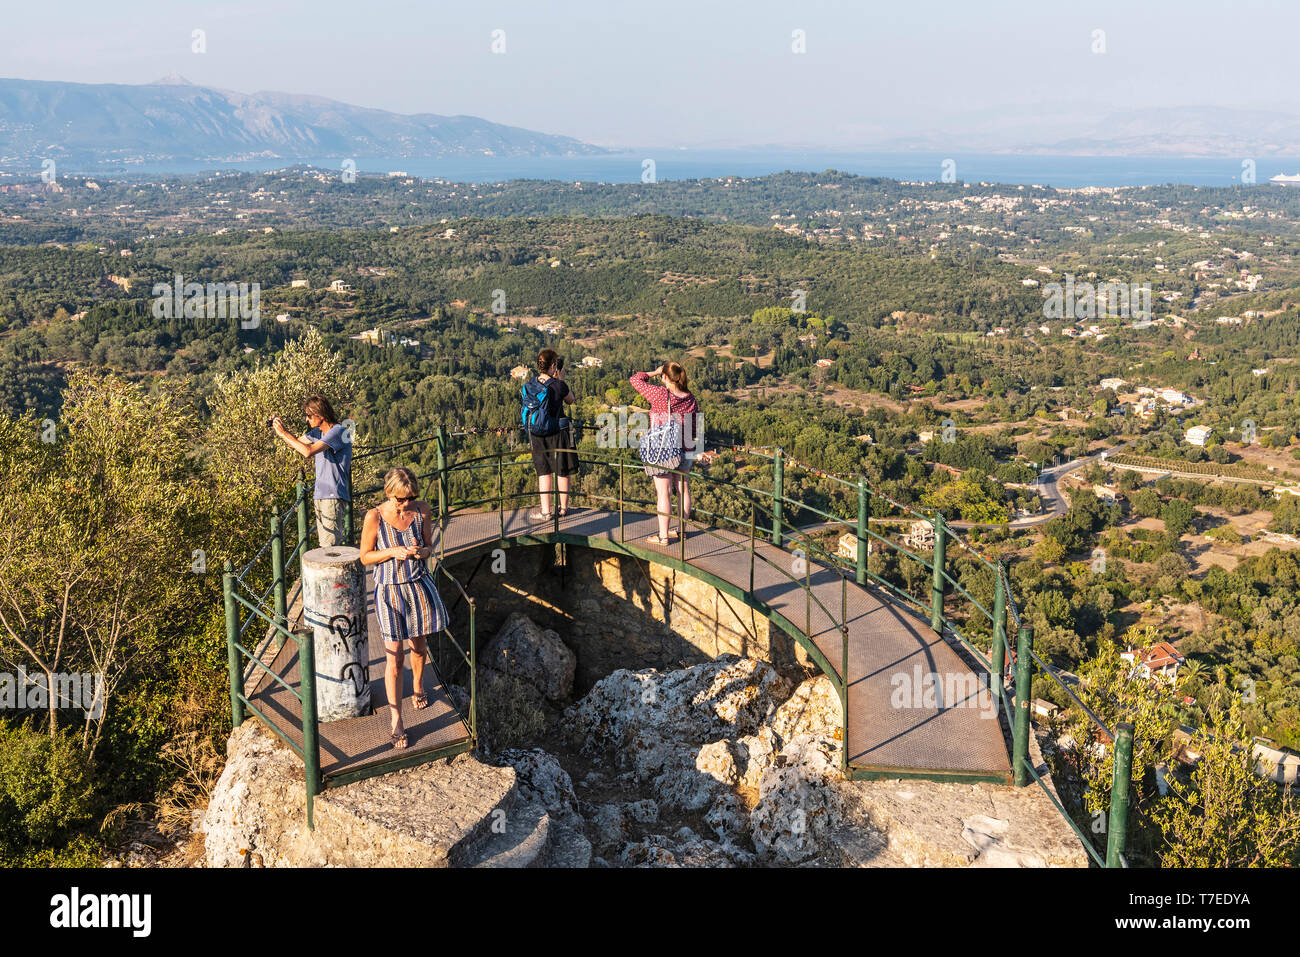 Emperor's Throne, observation point, Pelekas, Corfu Island, Ionian Islands, Greece Stock Photo